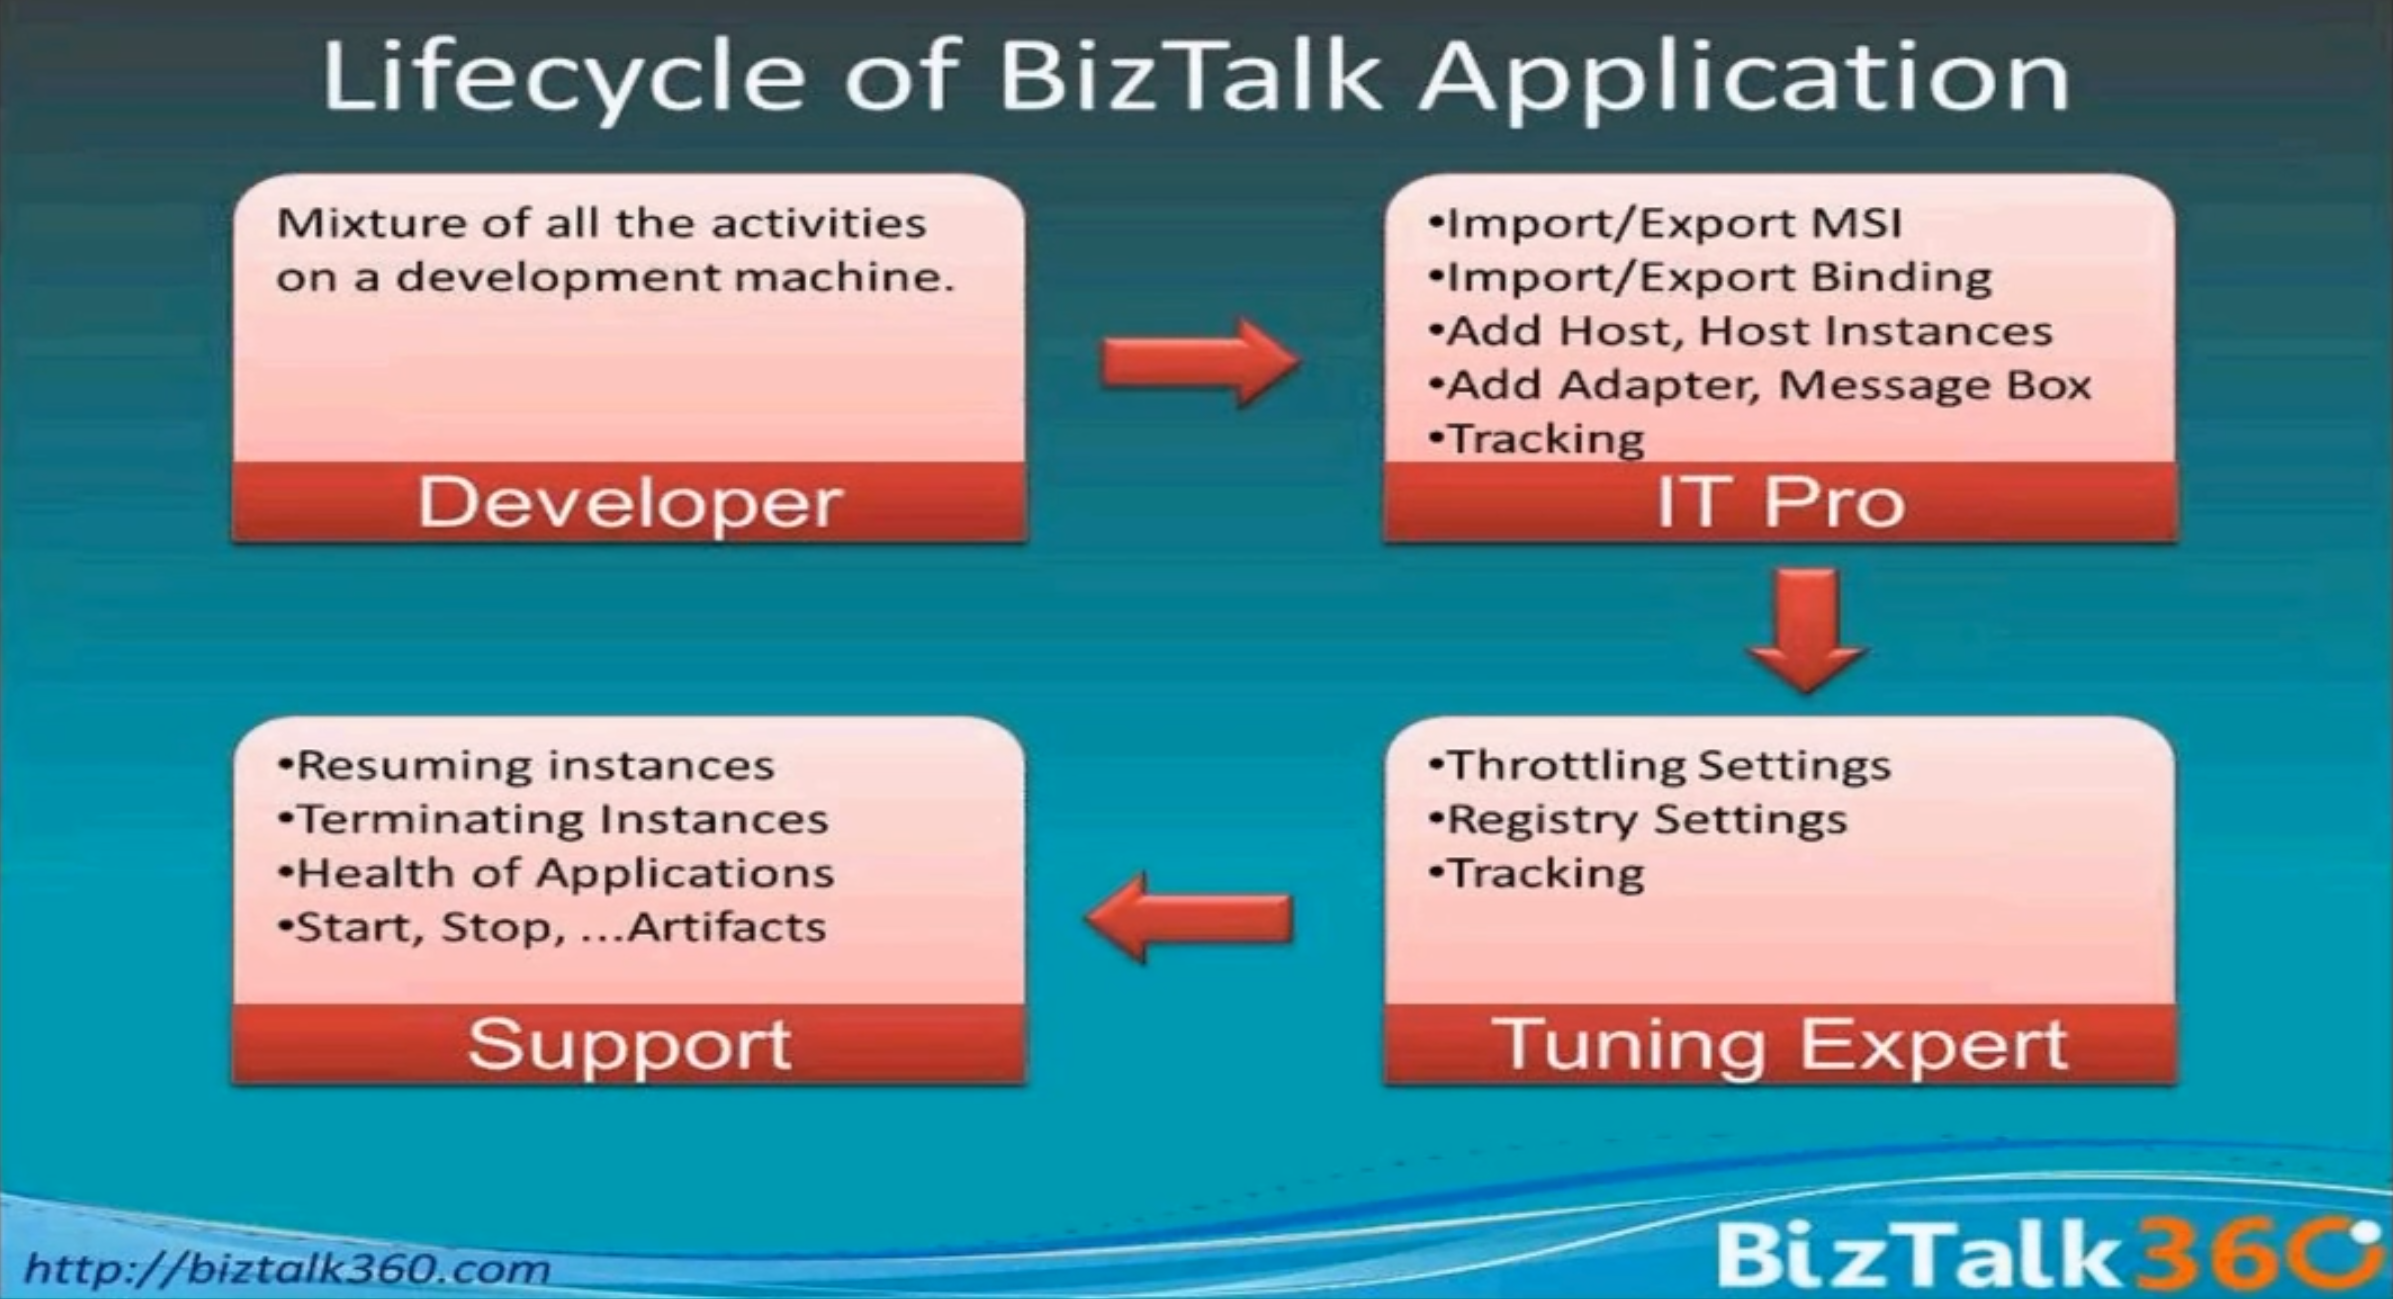 Lifecycle of BizTalk applications